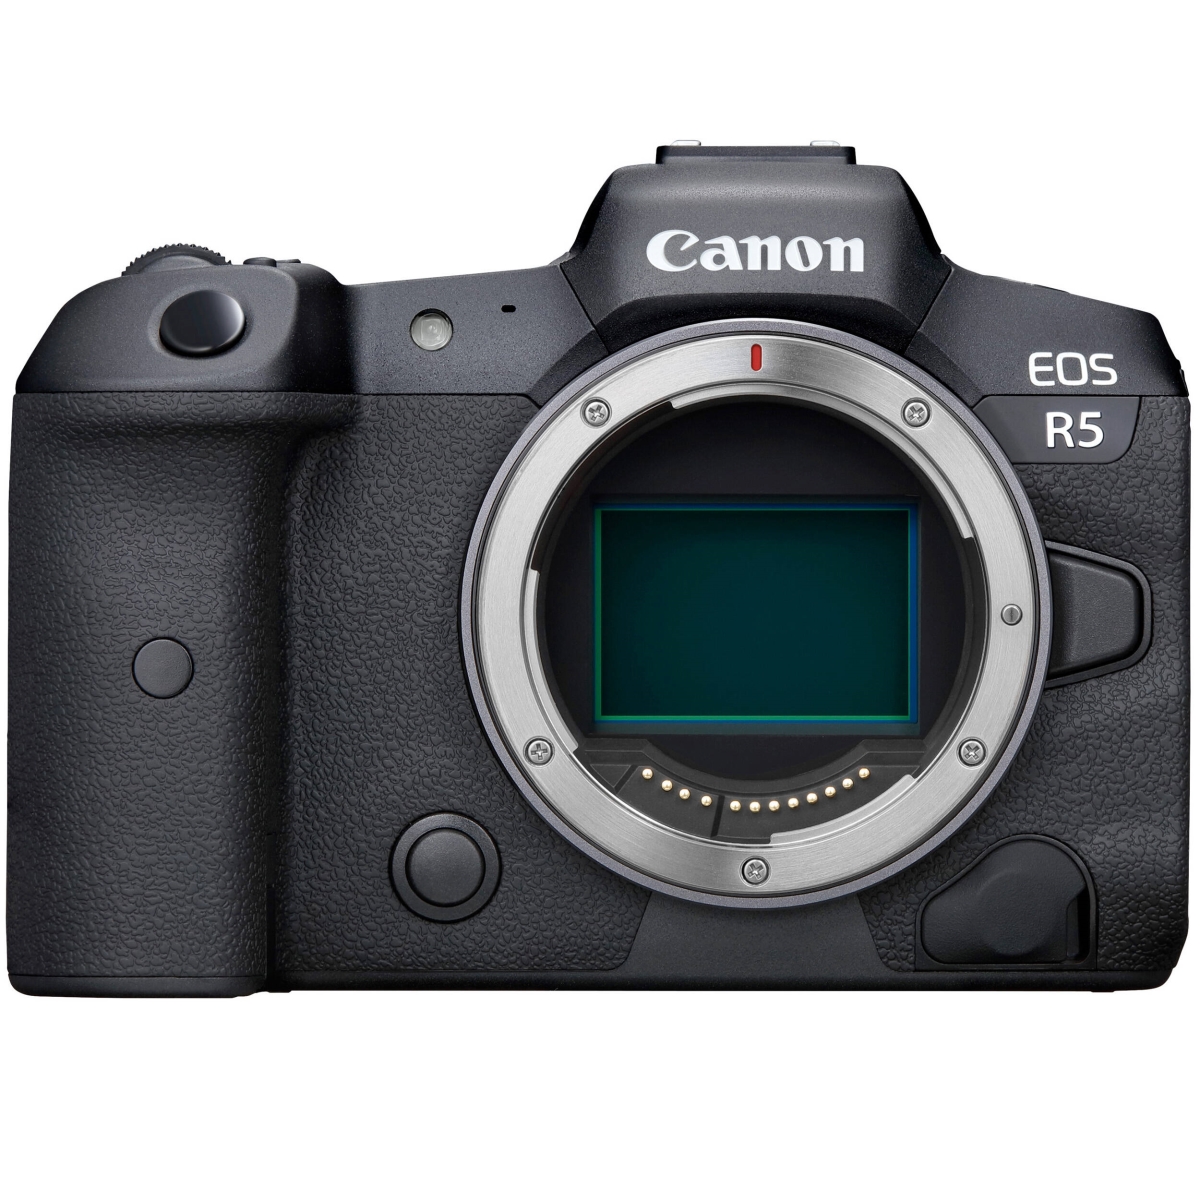 Picture of Canon 4147C002 EOS R5 Body Mirrorless Camera Body